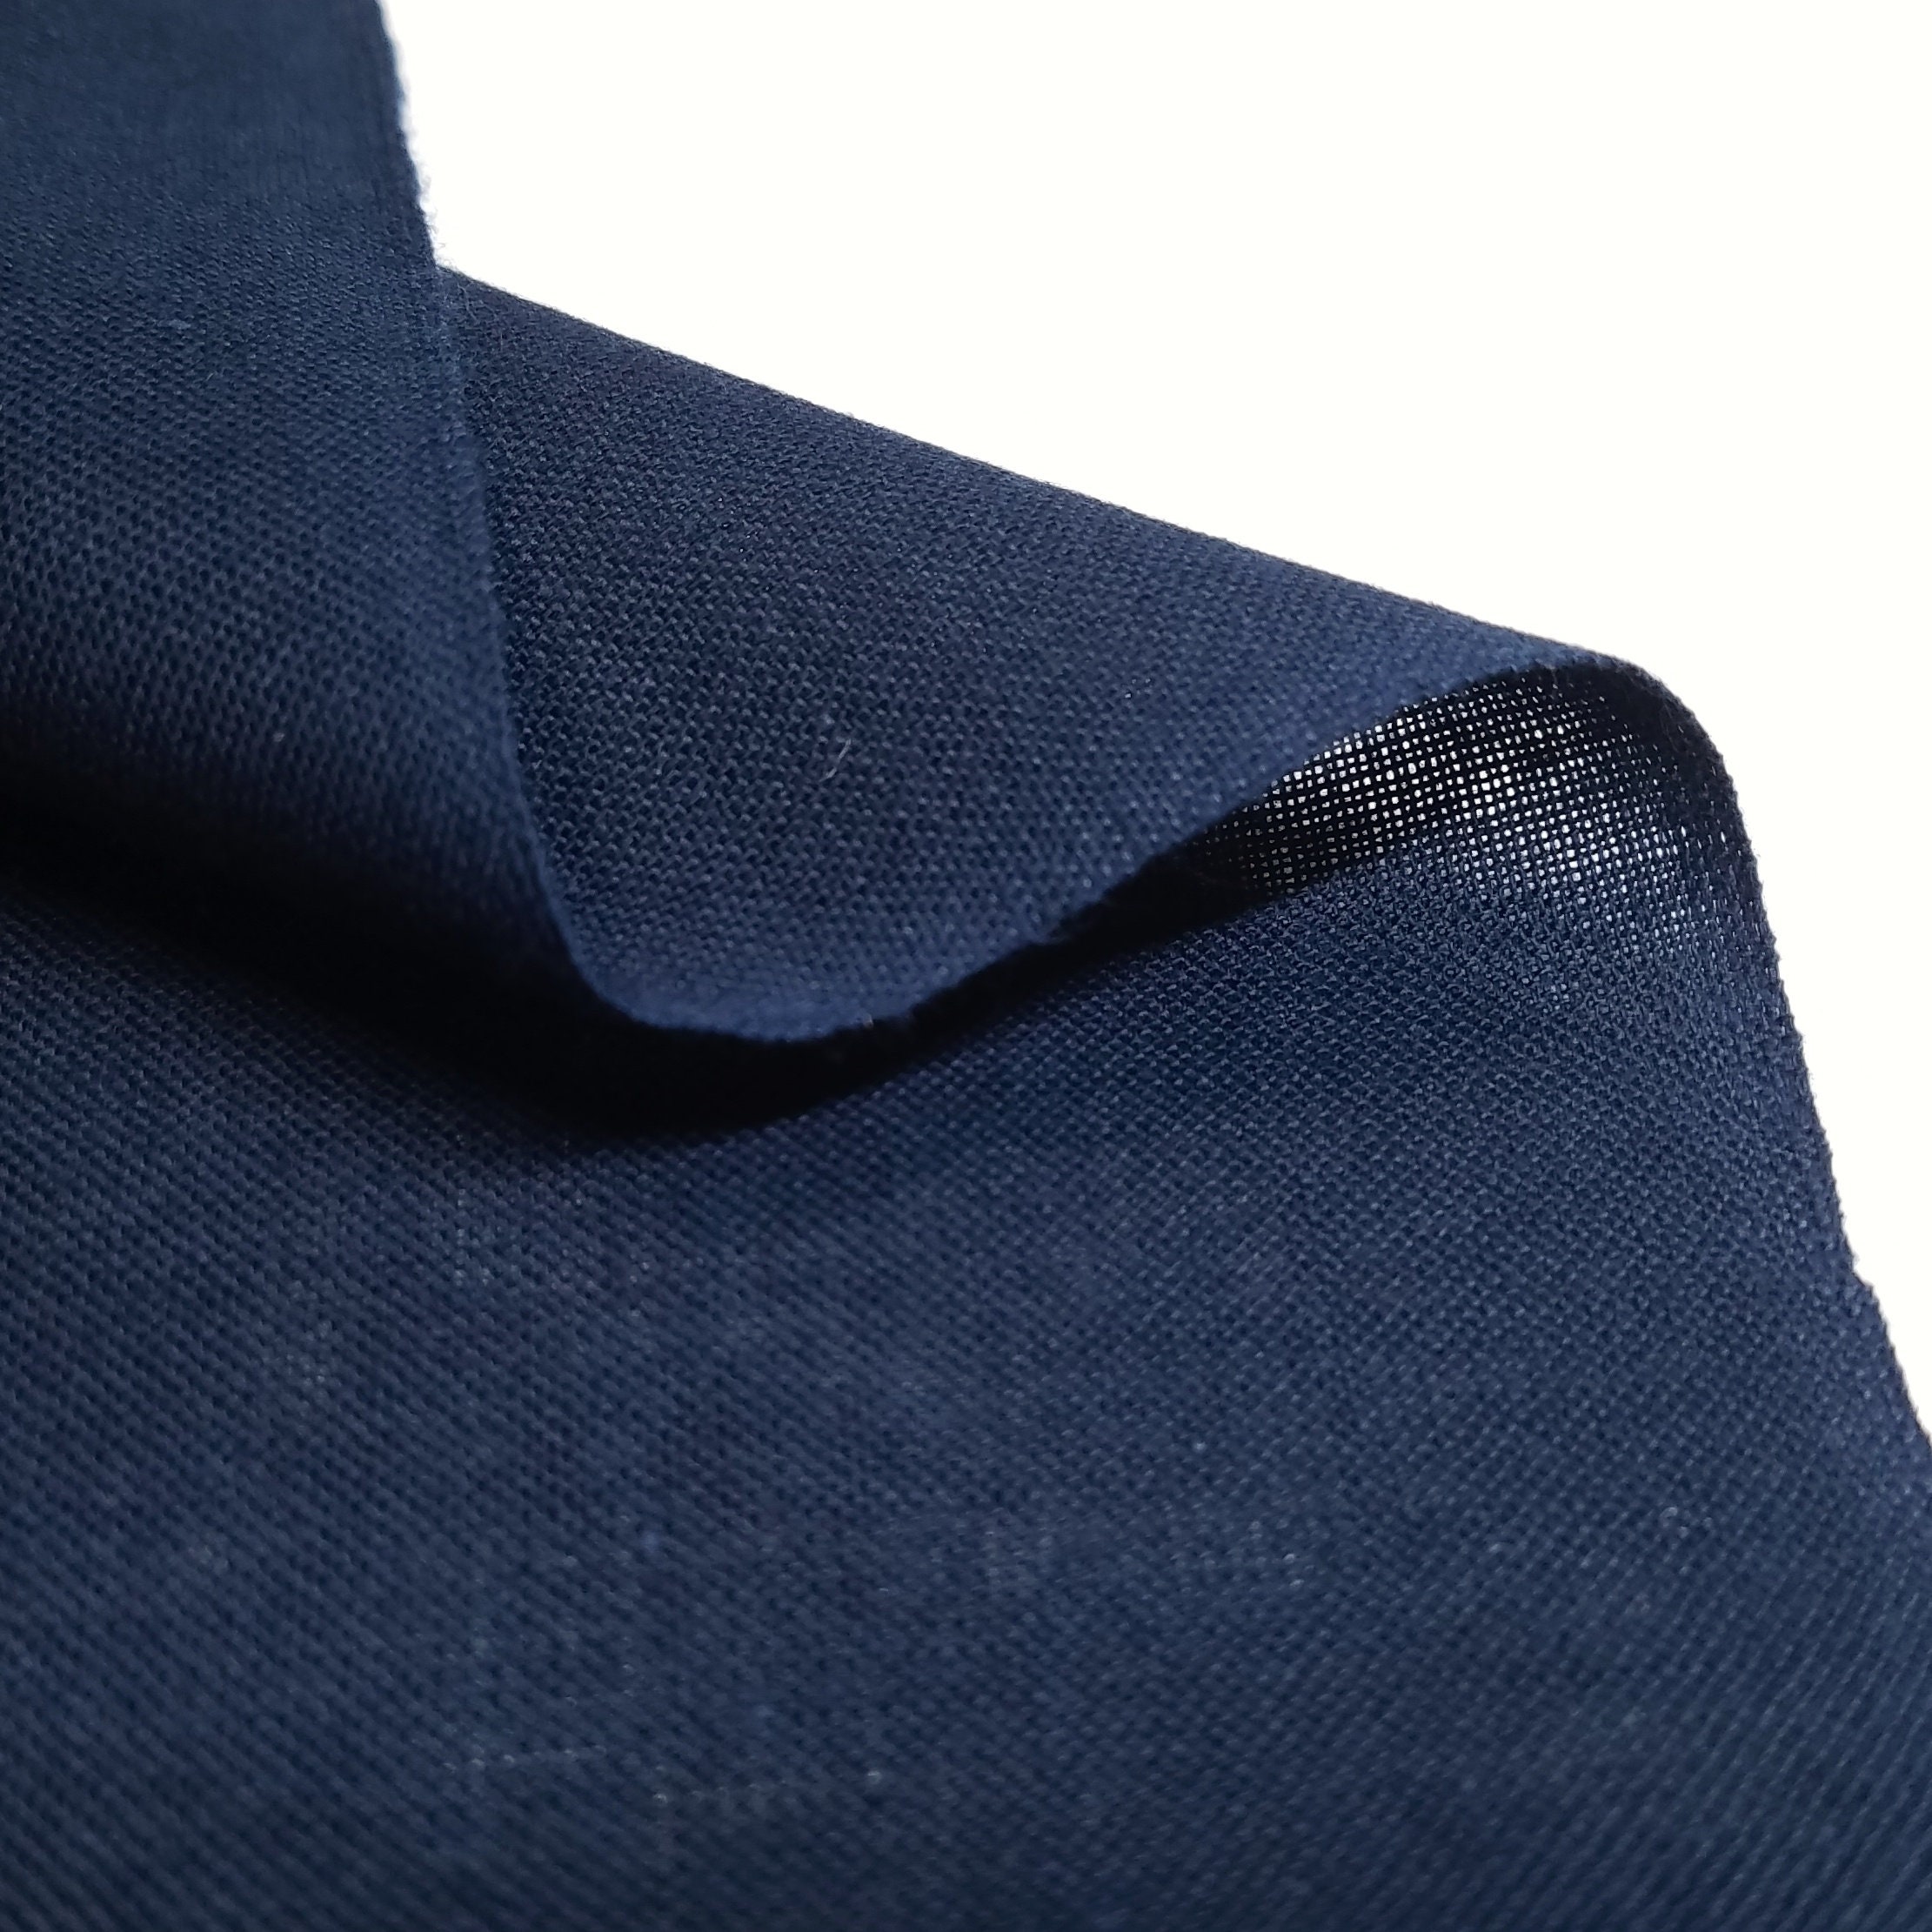 Olympus dotted sashiko sampler fabric in navy blue